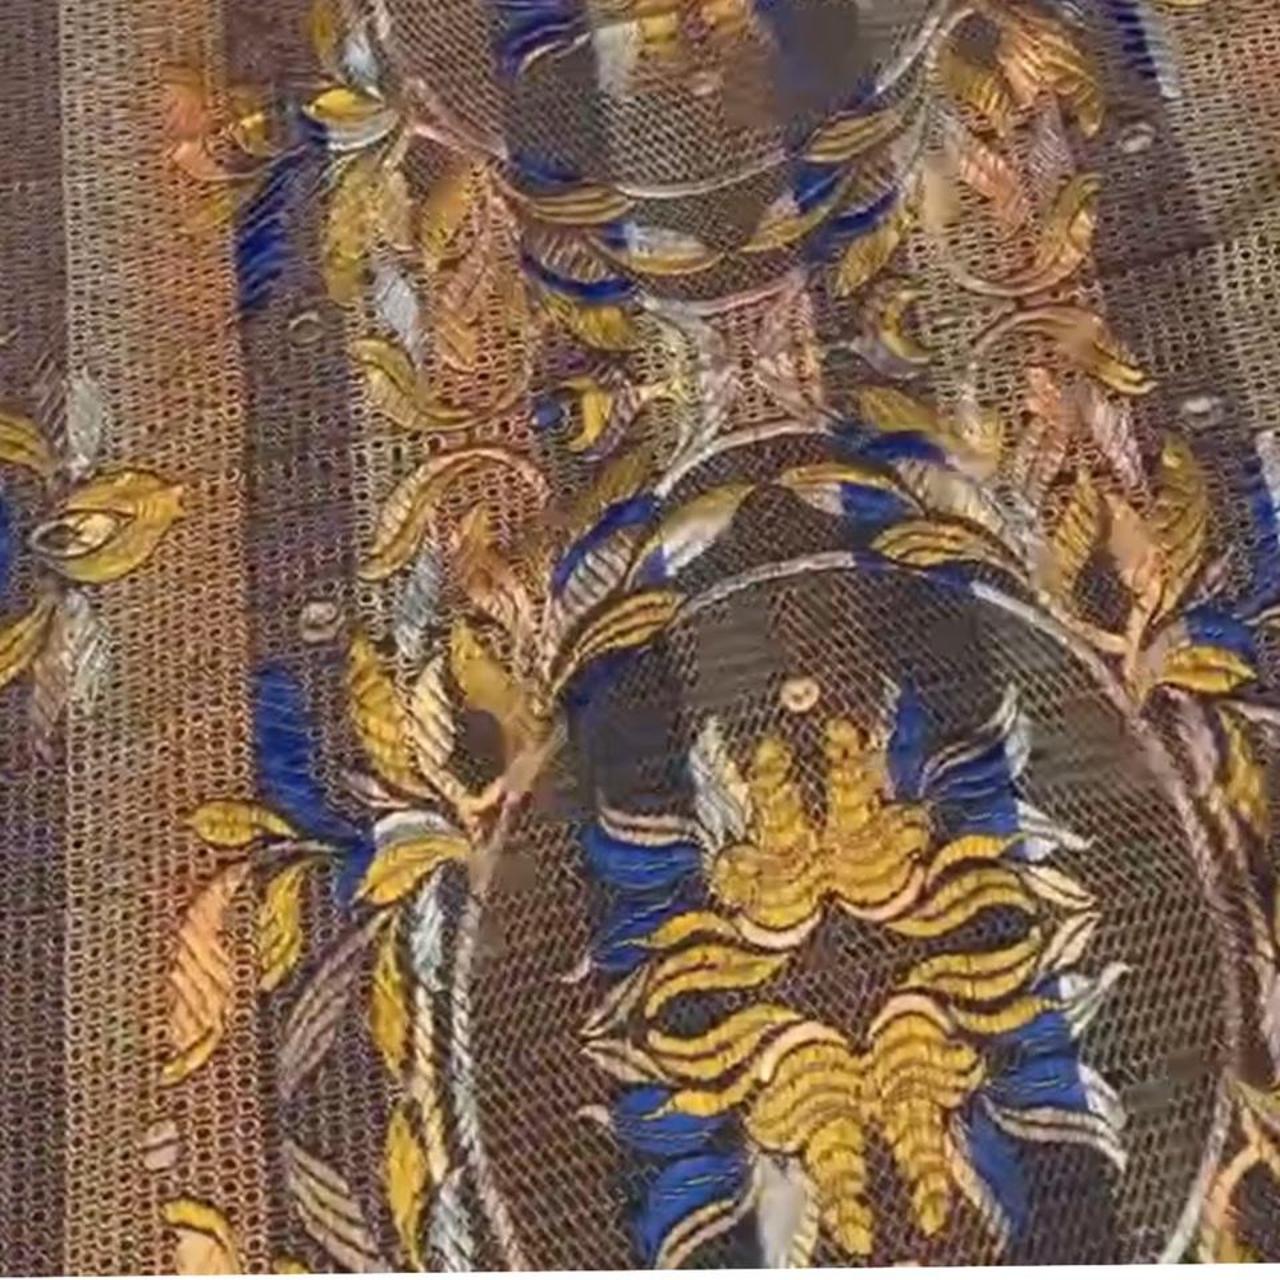 Louis Vuitton monogram tapestry - Depop